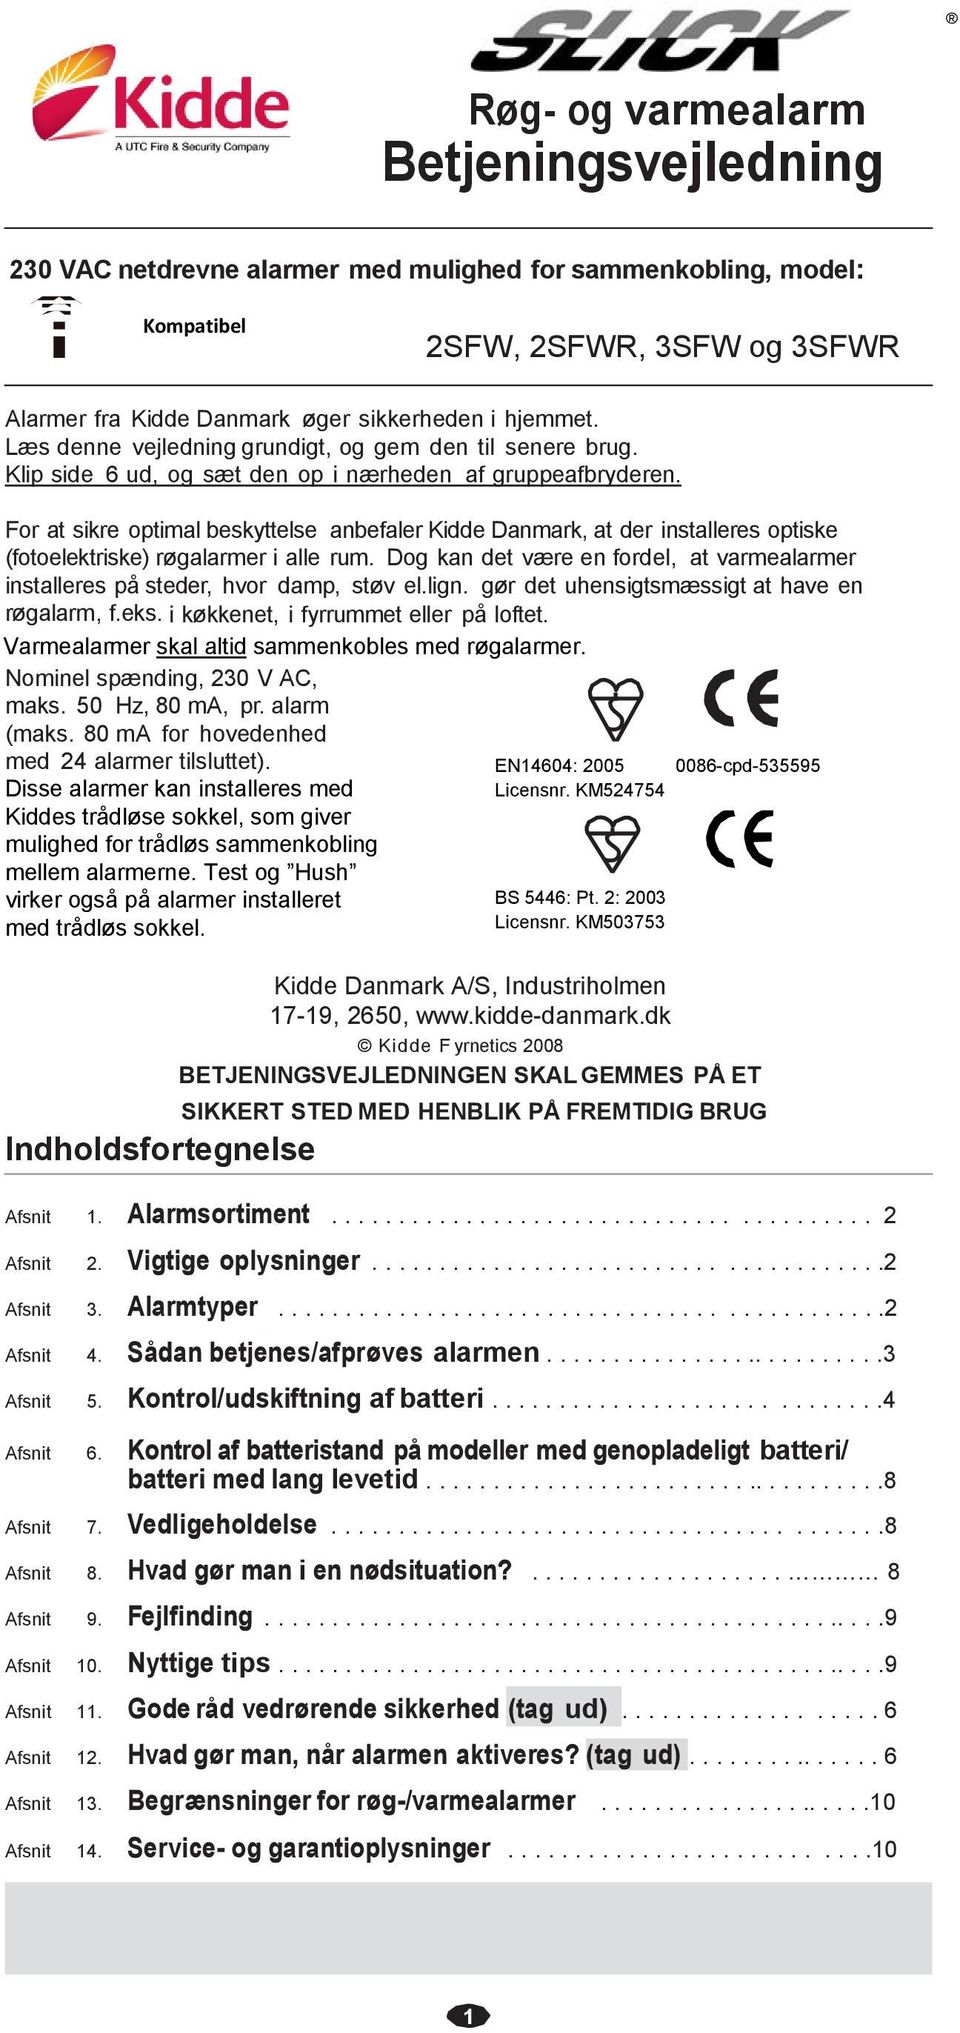 For at sikre optimal beskyttelse anbefaler Kidde Danmark, at der installeres optiske (fotoelektriske) røgalarmer i alle rum.